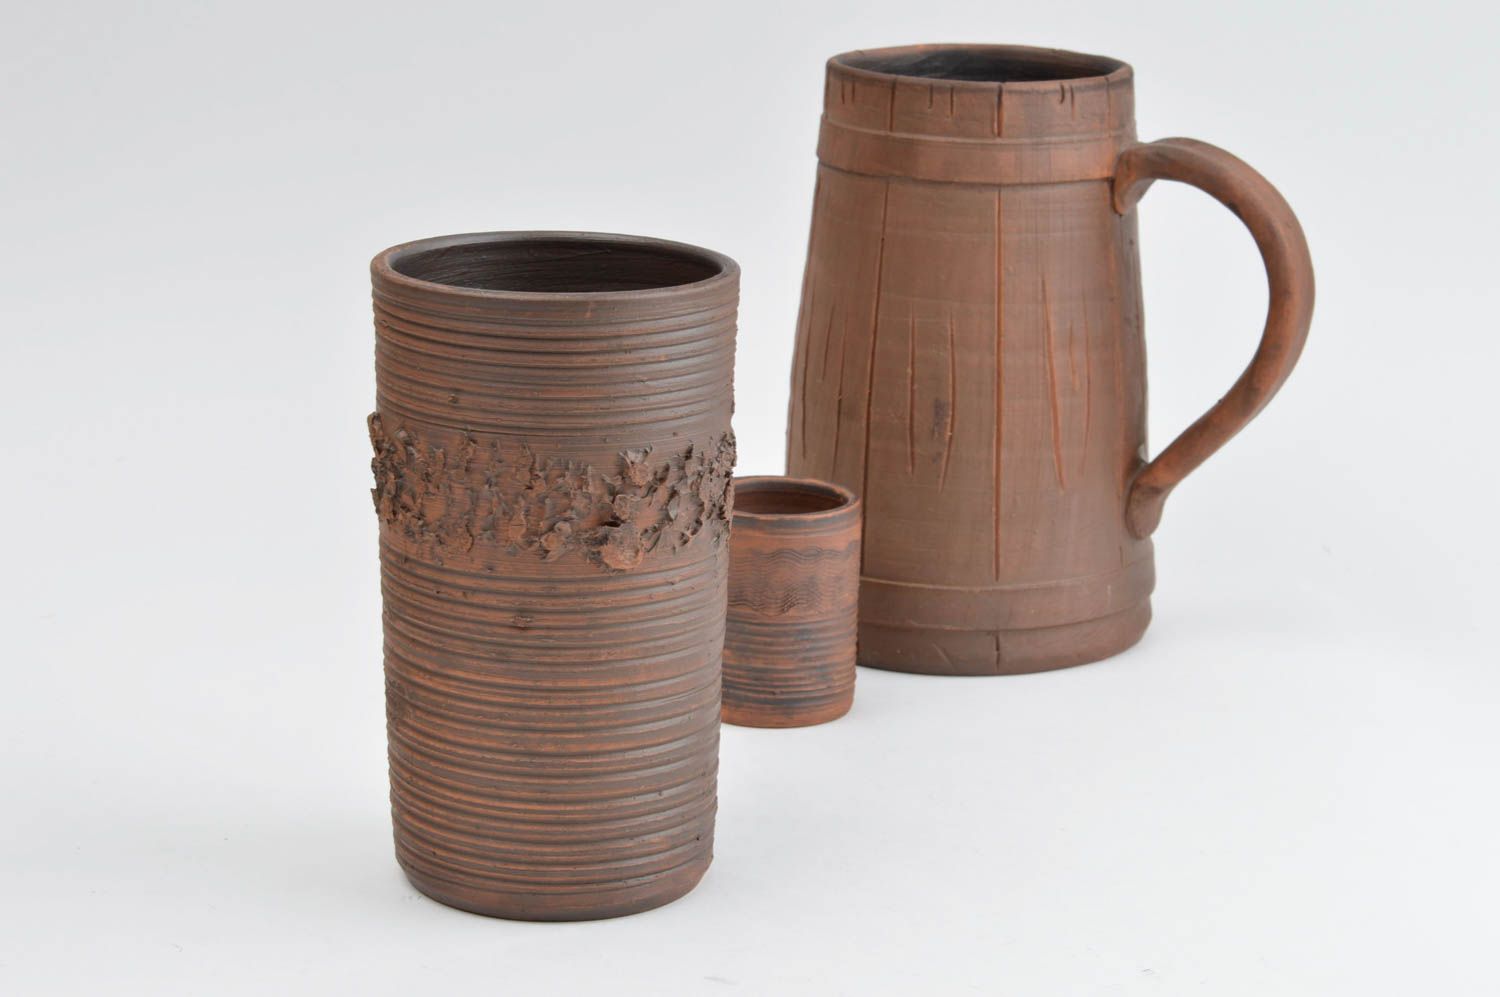 Ceramic tableware designer kitchenware eco-friendly dishes beer mug gift ideas photo 3